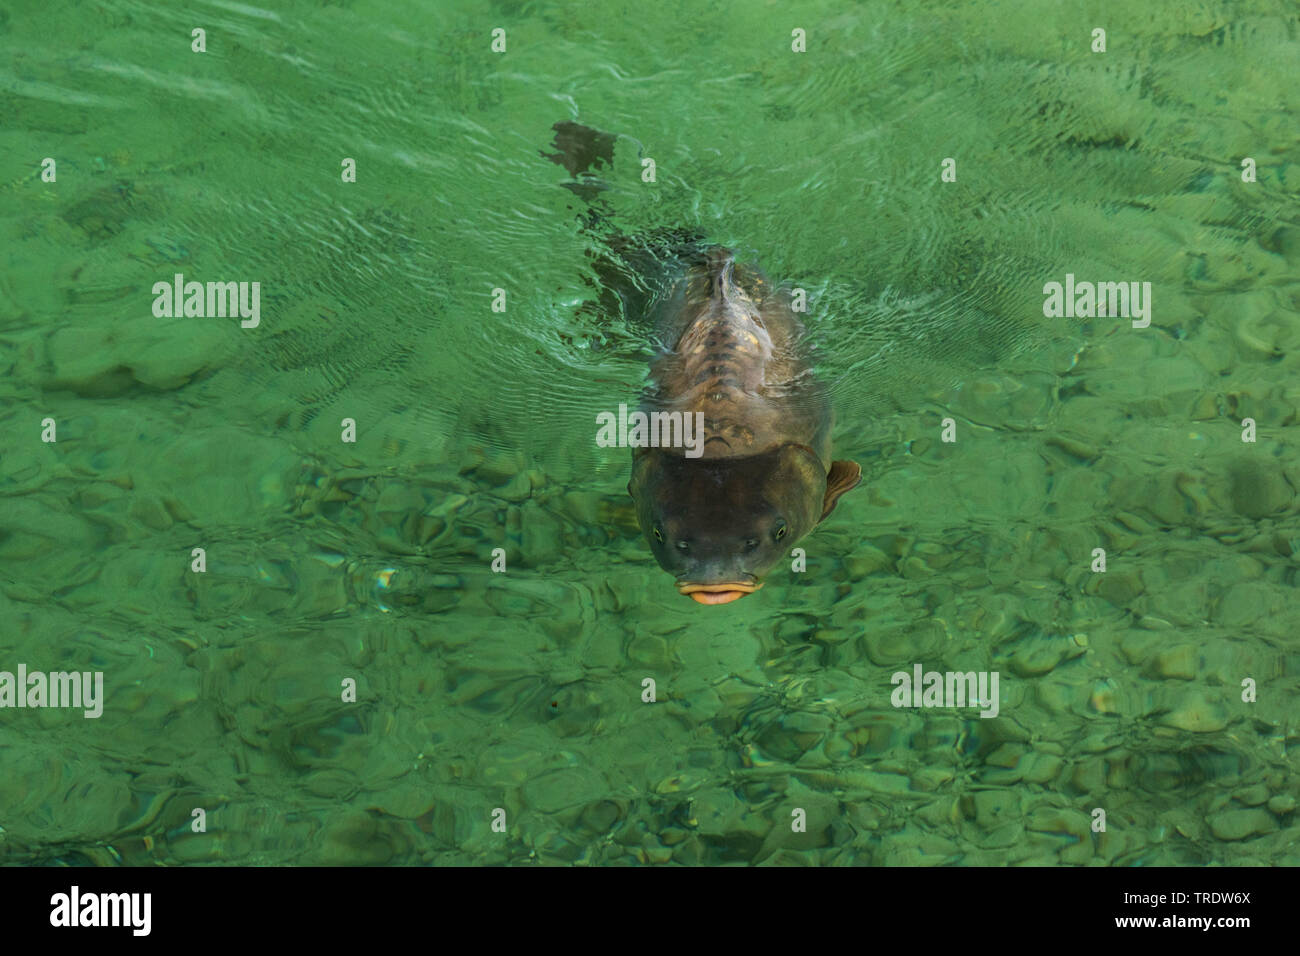 carp, common carp, European carp (Cyprinus carpio), mirror carp swimming at the water surface, front view, Germany, Bavaria Stock Photo